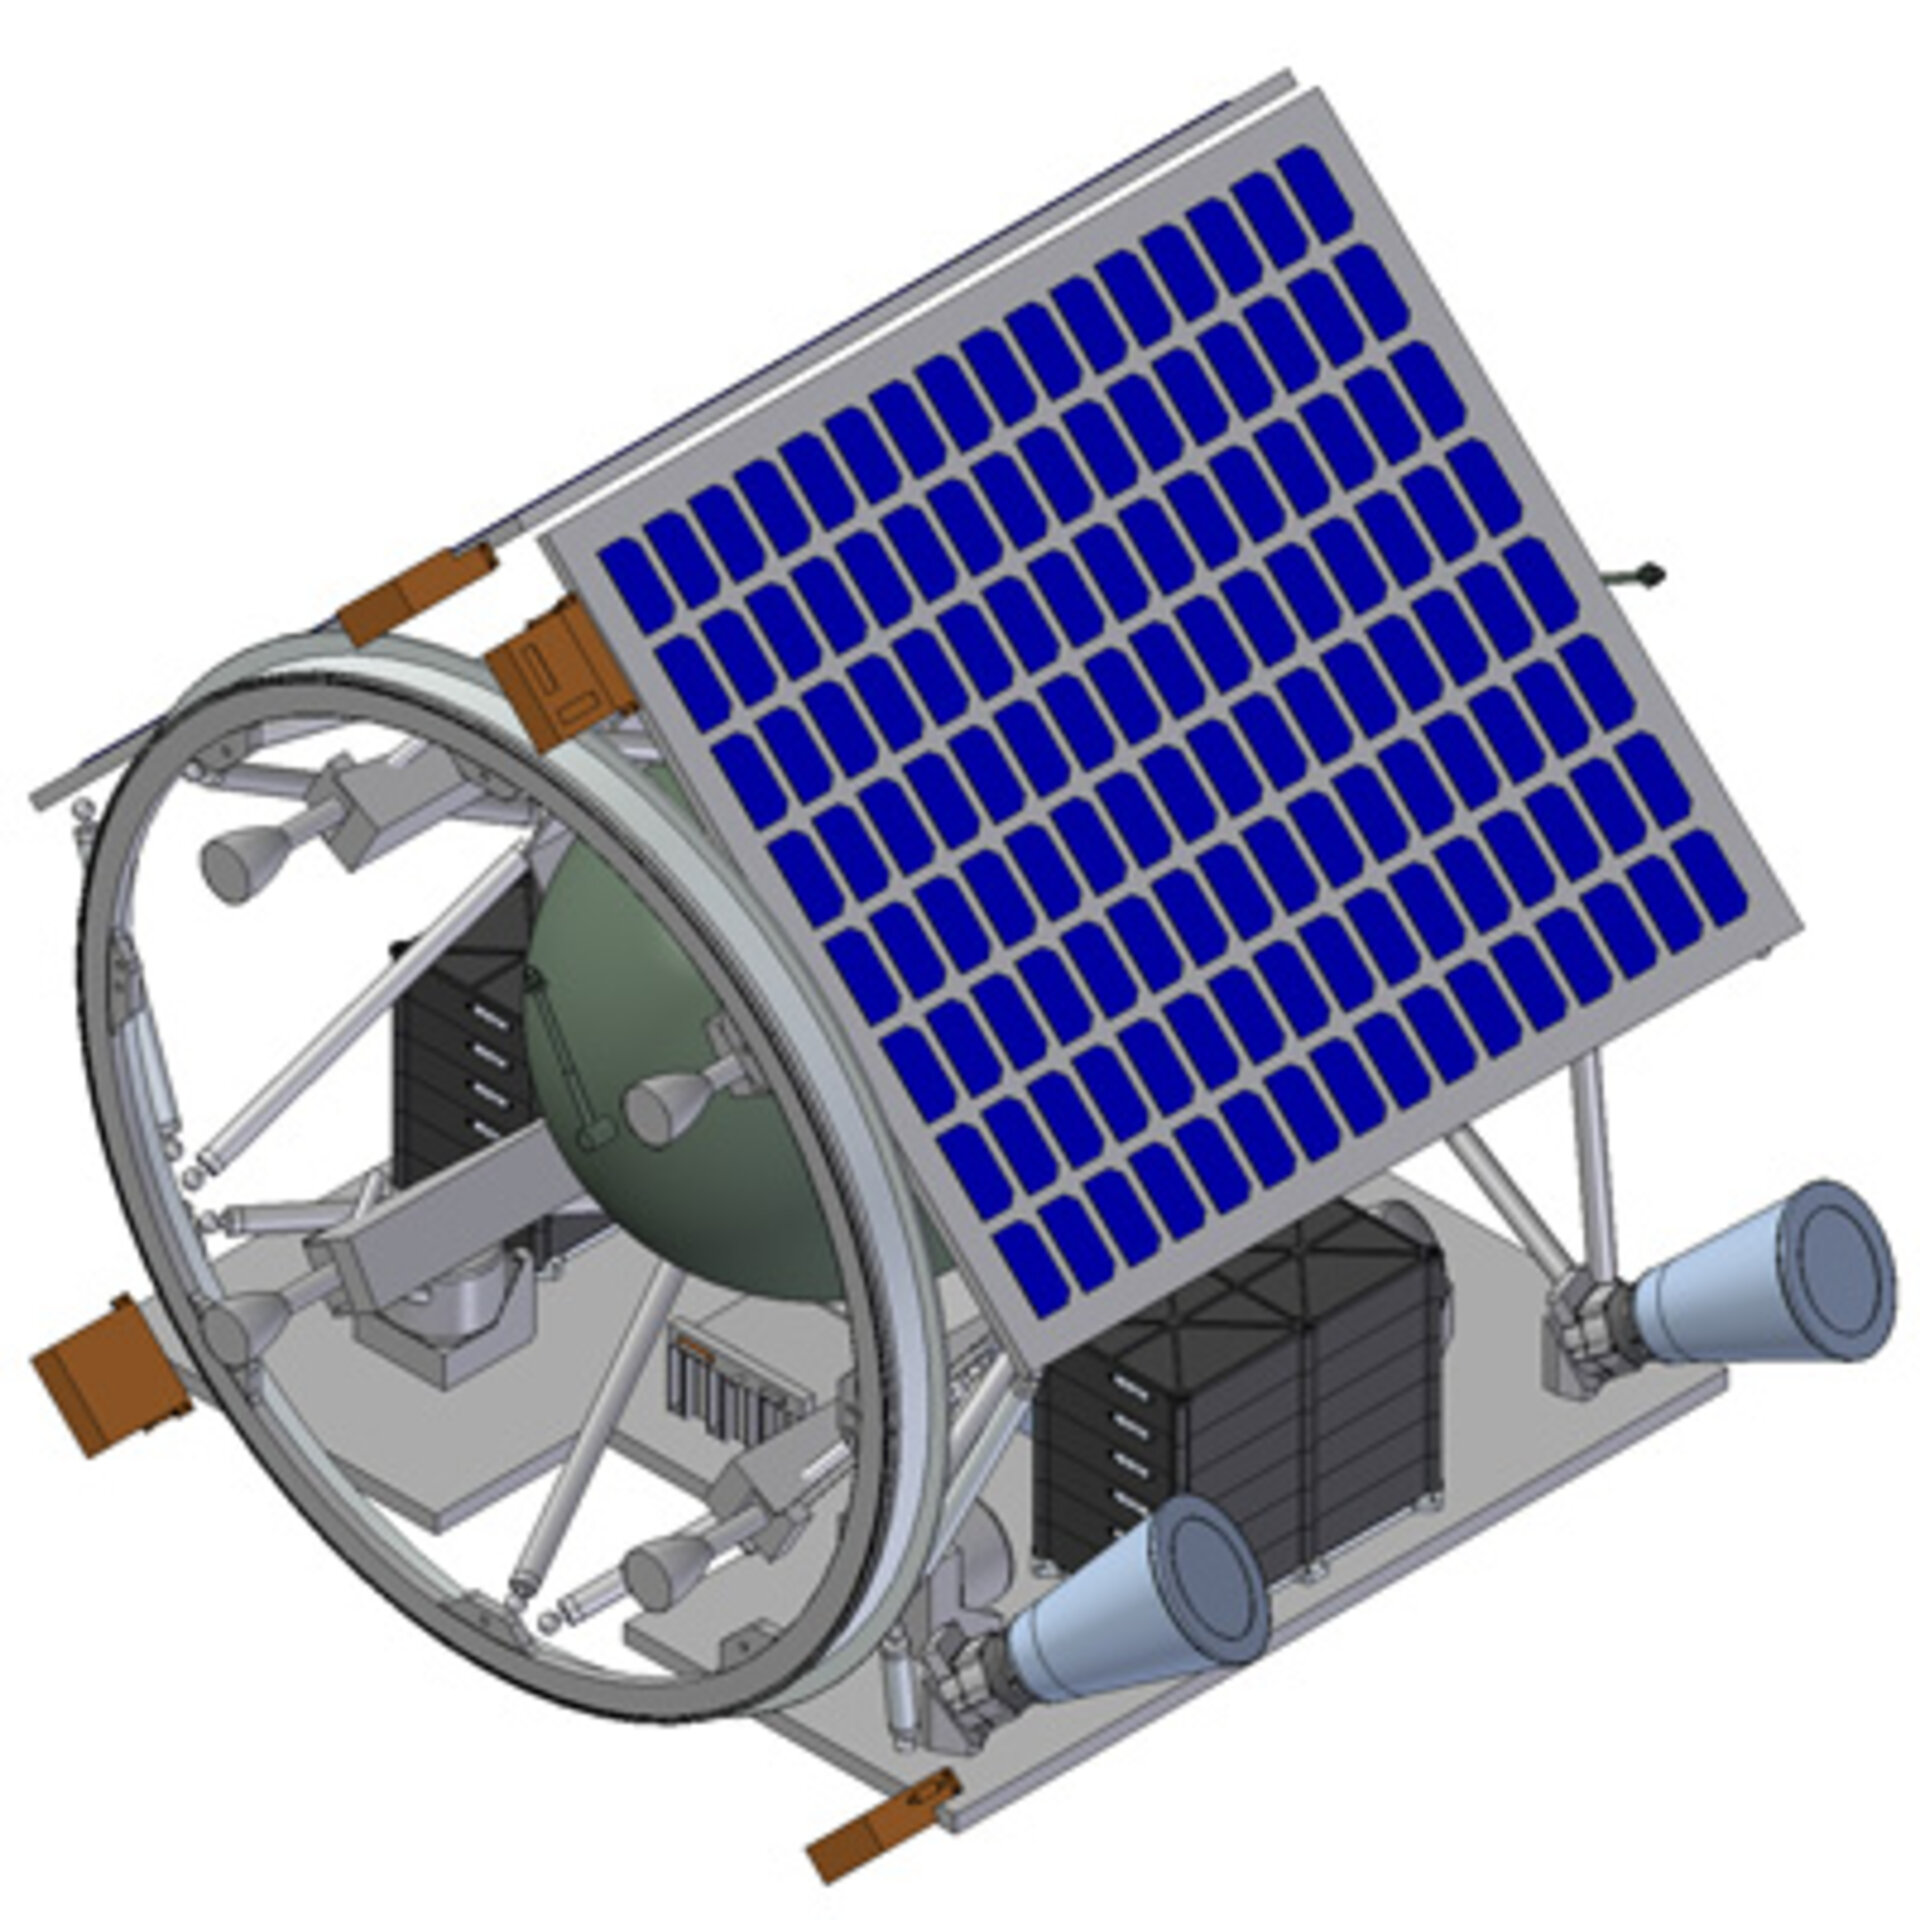 ESMO spacecraft